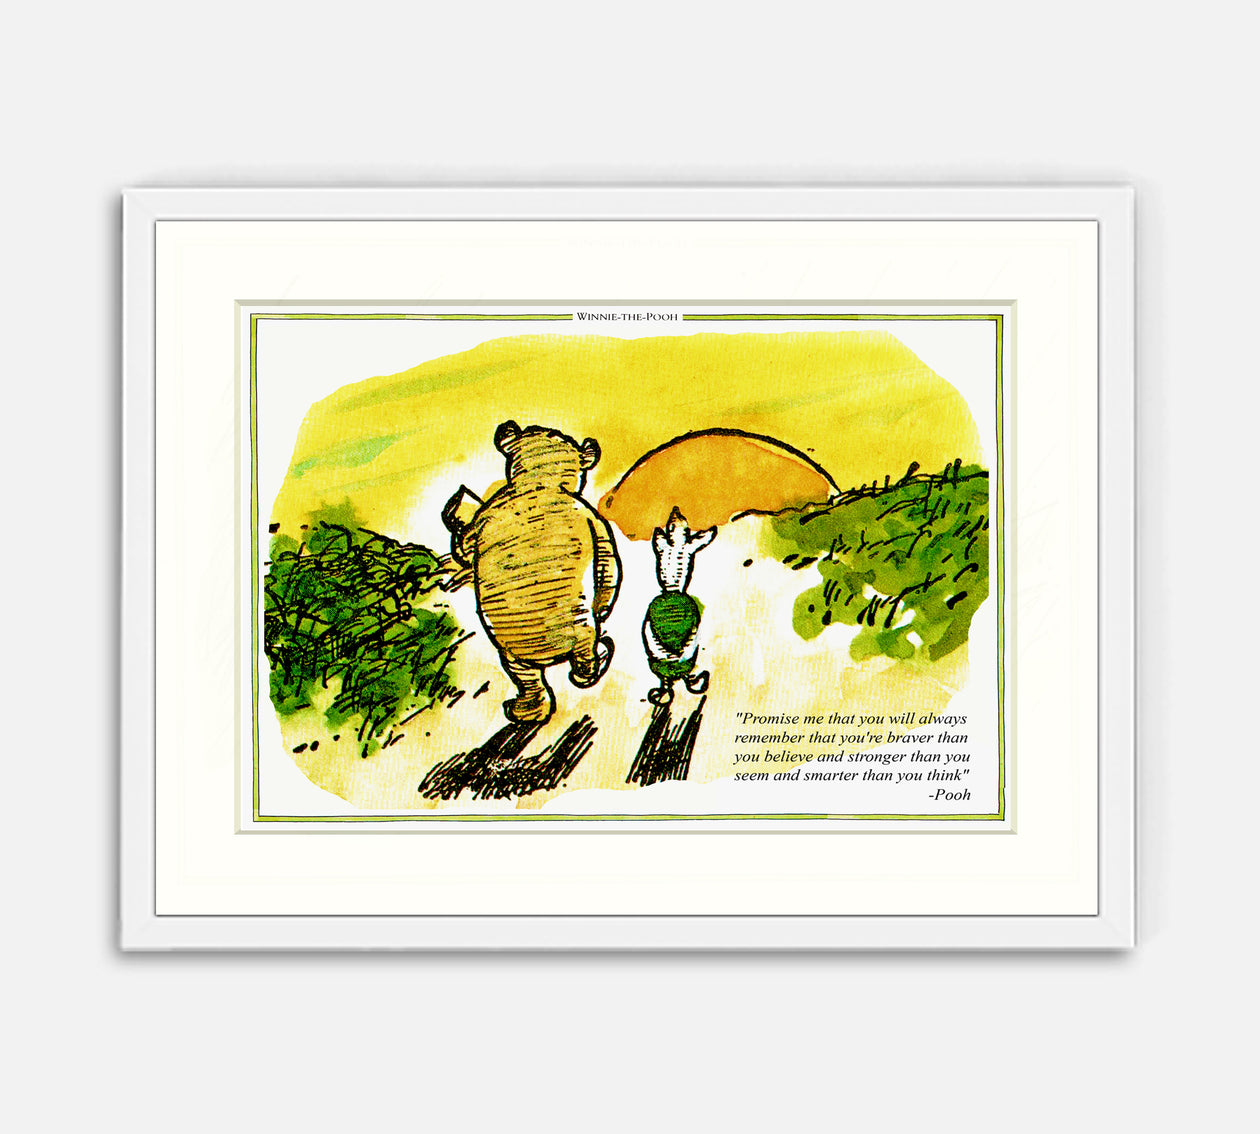 Winnie the Pooh Print: Promise Me